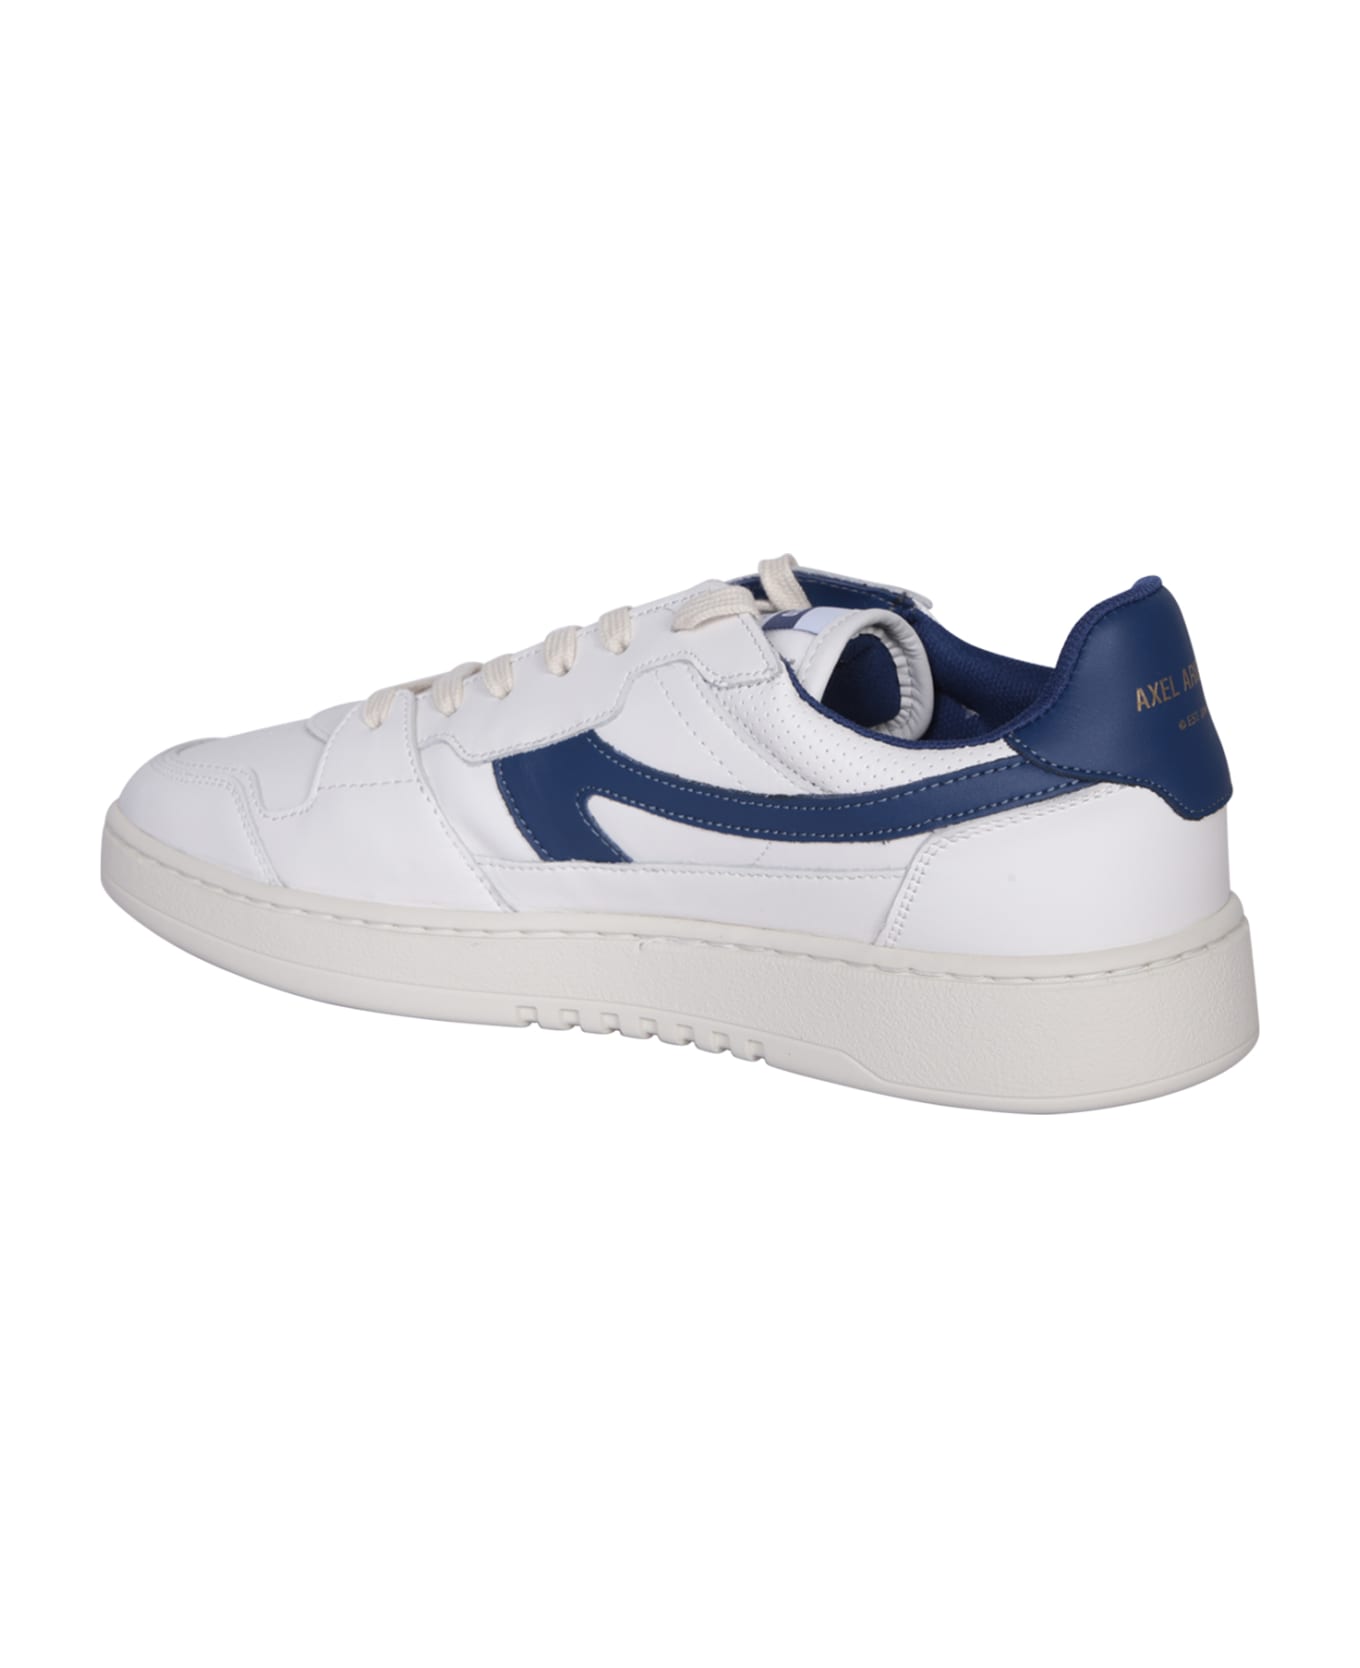 Axel Arigato Dice Stripe White/ Blue Sneakers - White